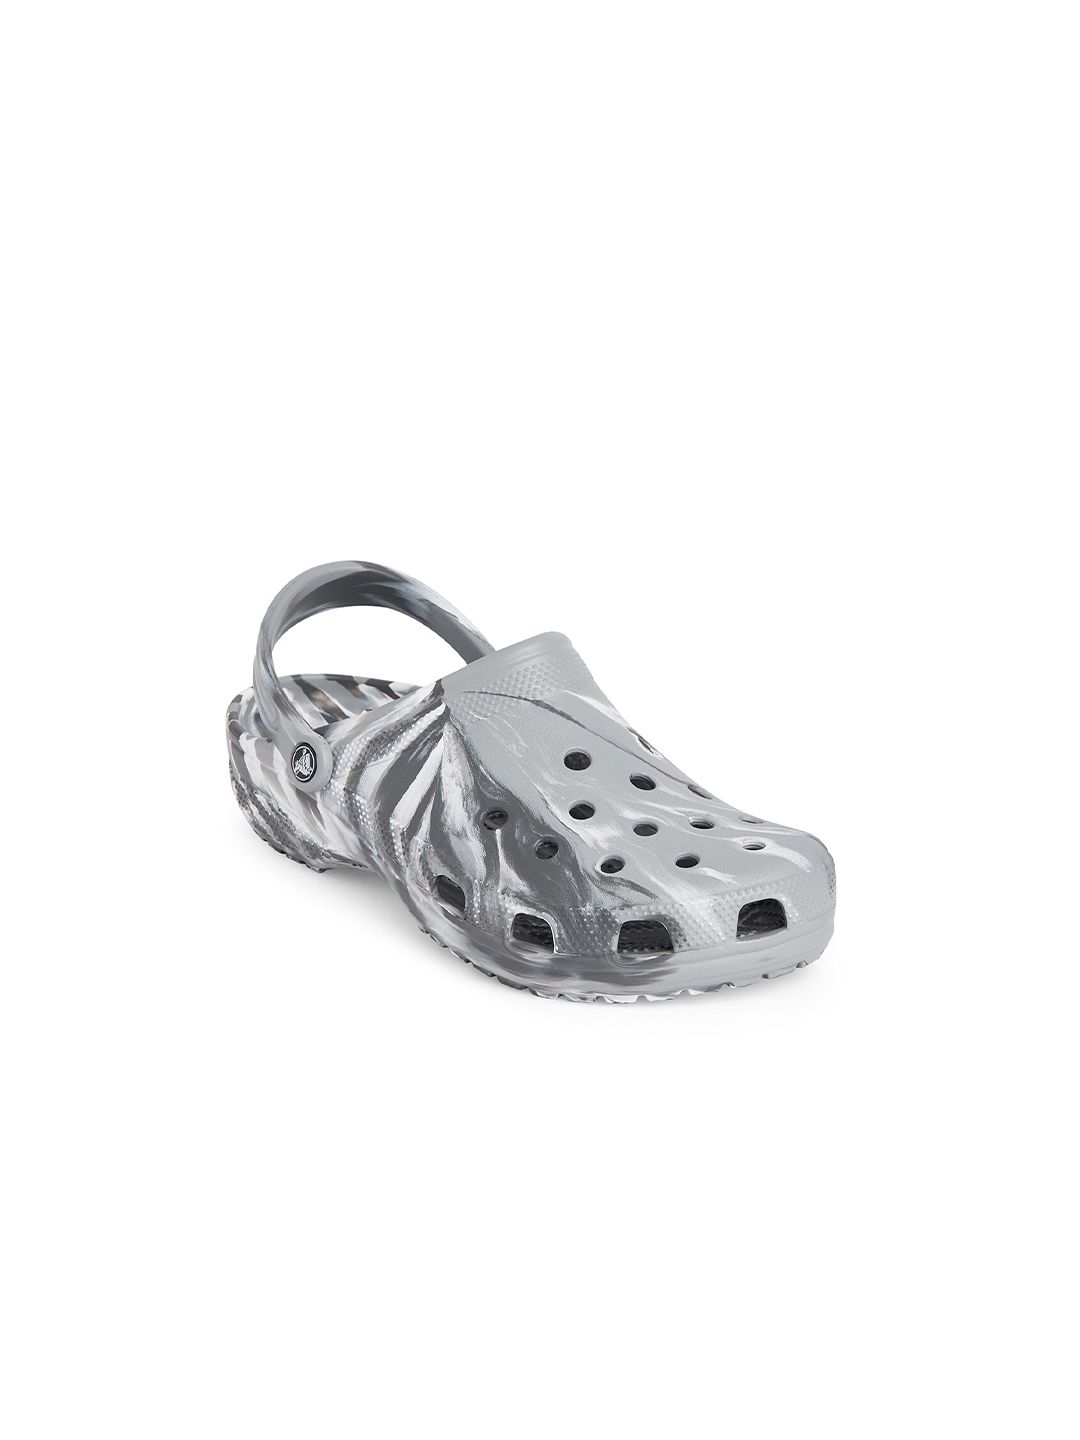 Crocs Grey Embellished Croslite Clogs Price in India